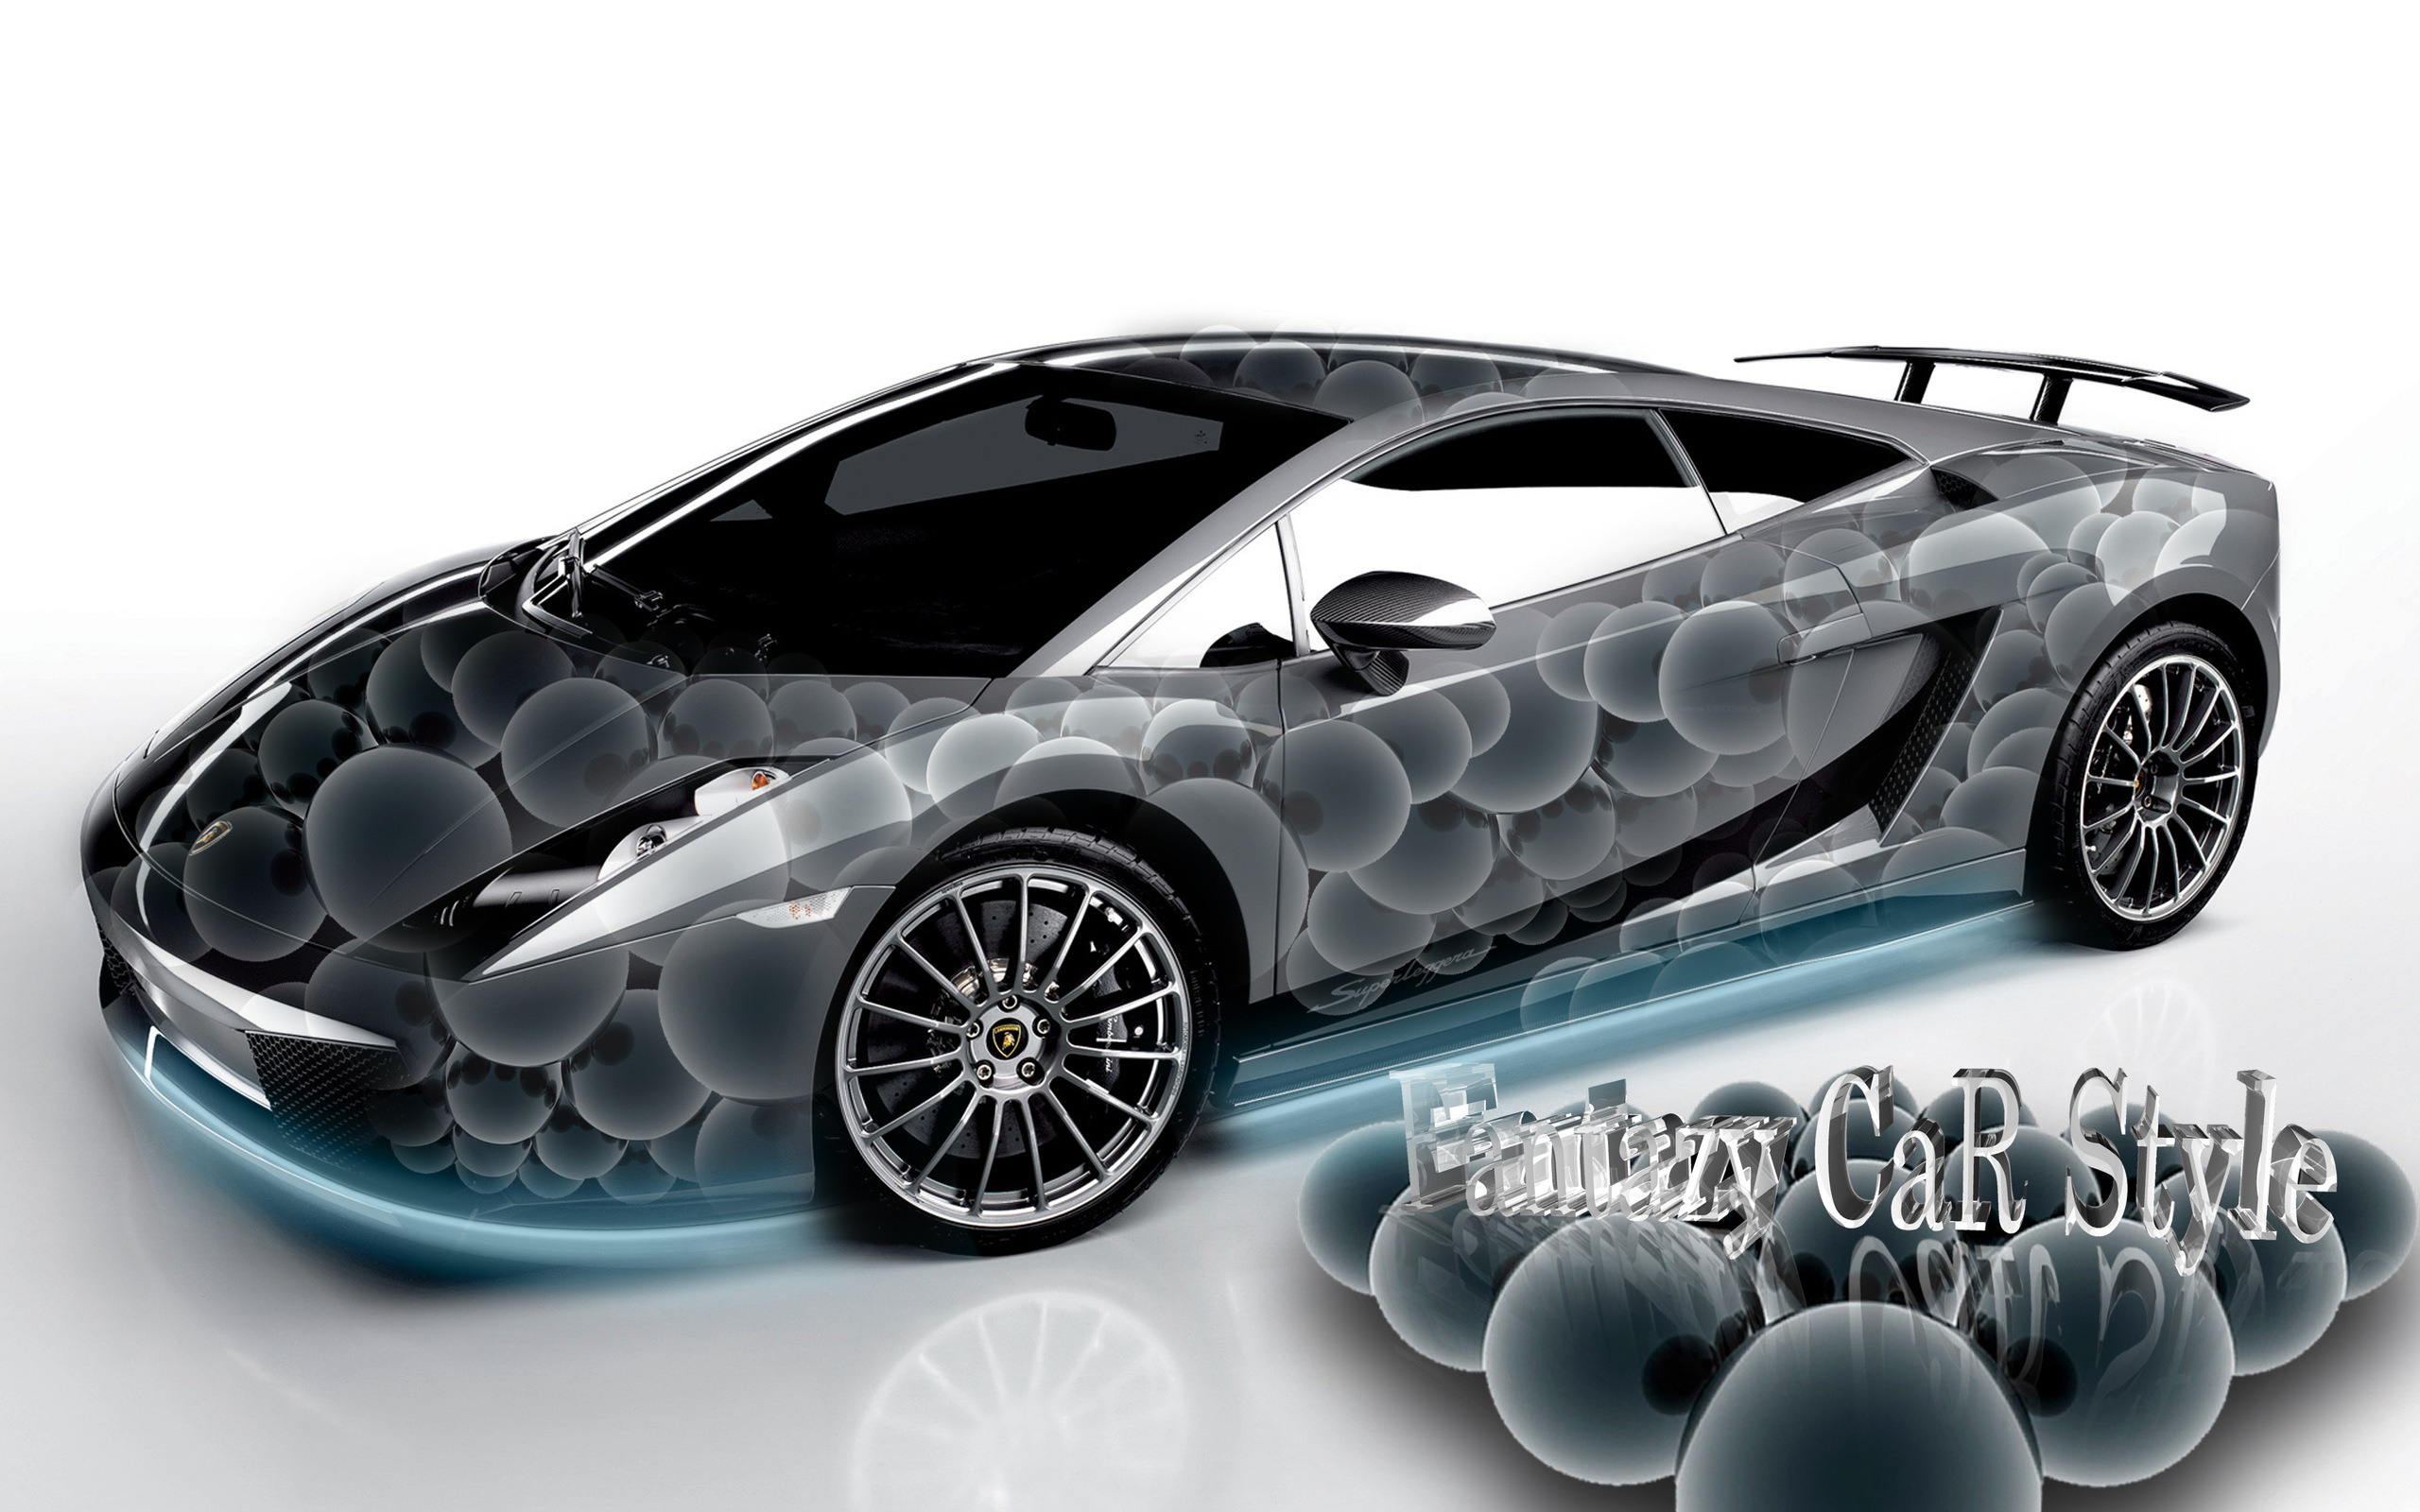 3d обои Фантазийная модель авто с шарами для боулинга (Fantazy Car Style)  фразы # 83618